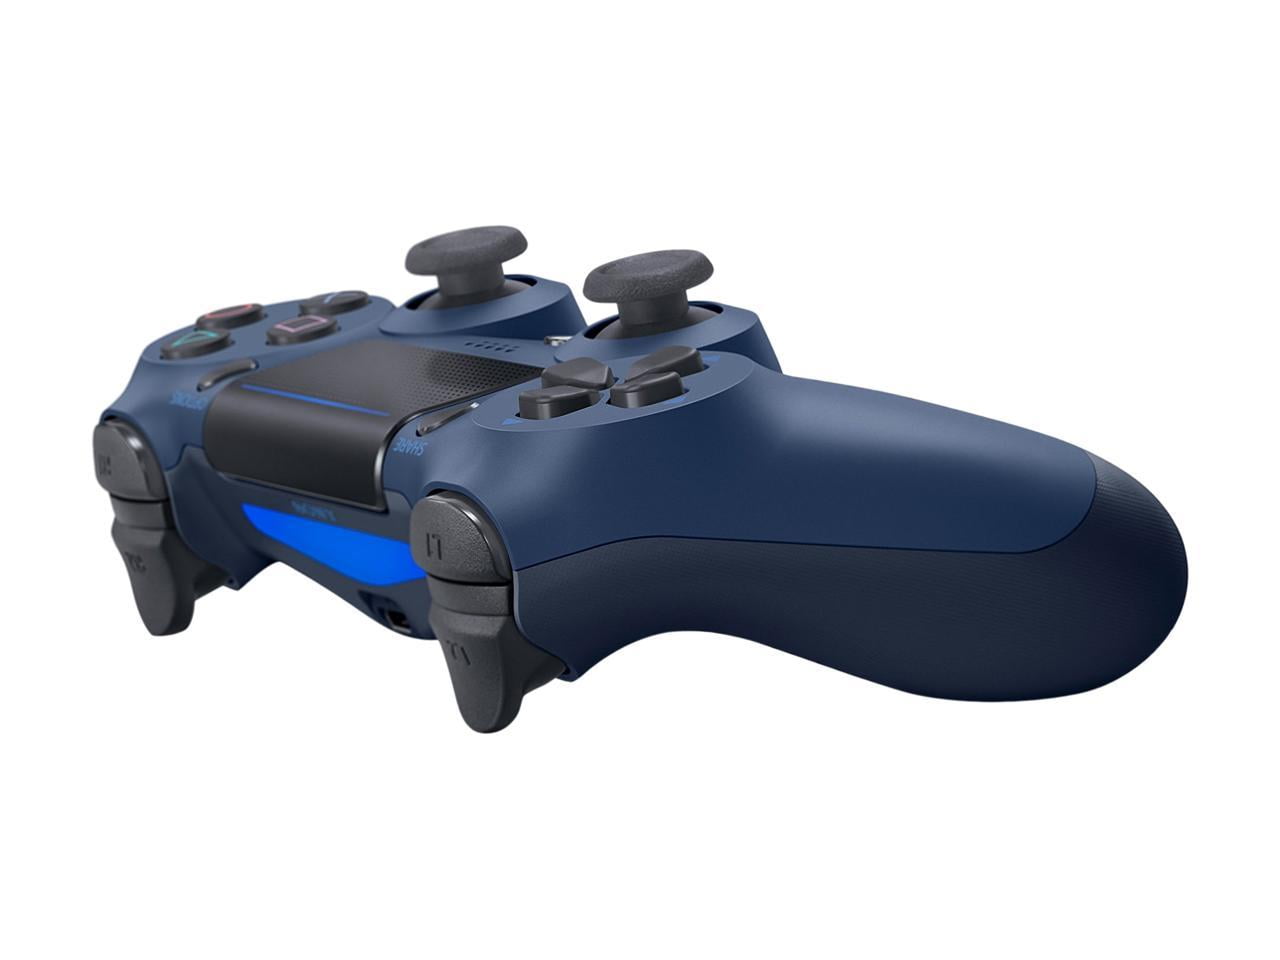 Sony PS4 4 Wireless Controller - Midnight Blue - Walmart.com